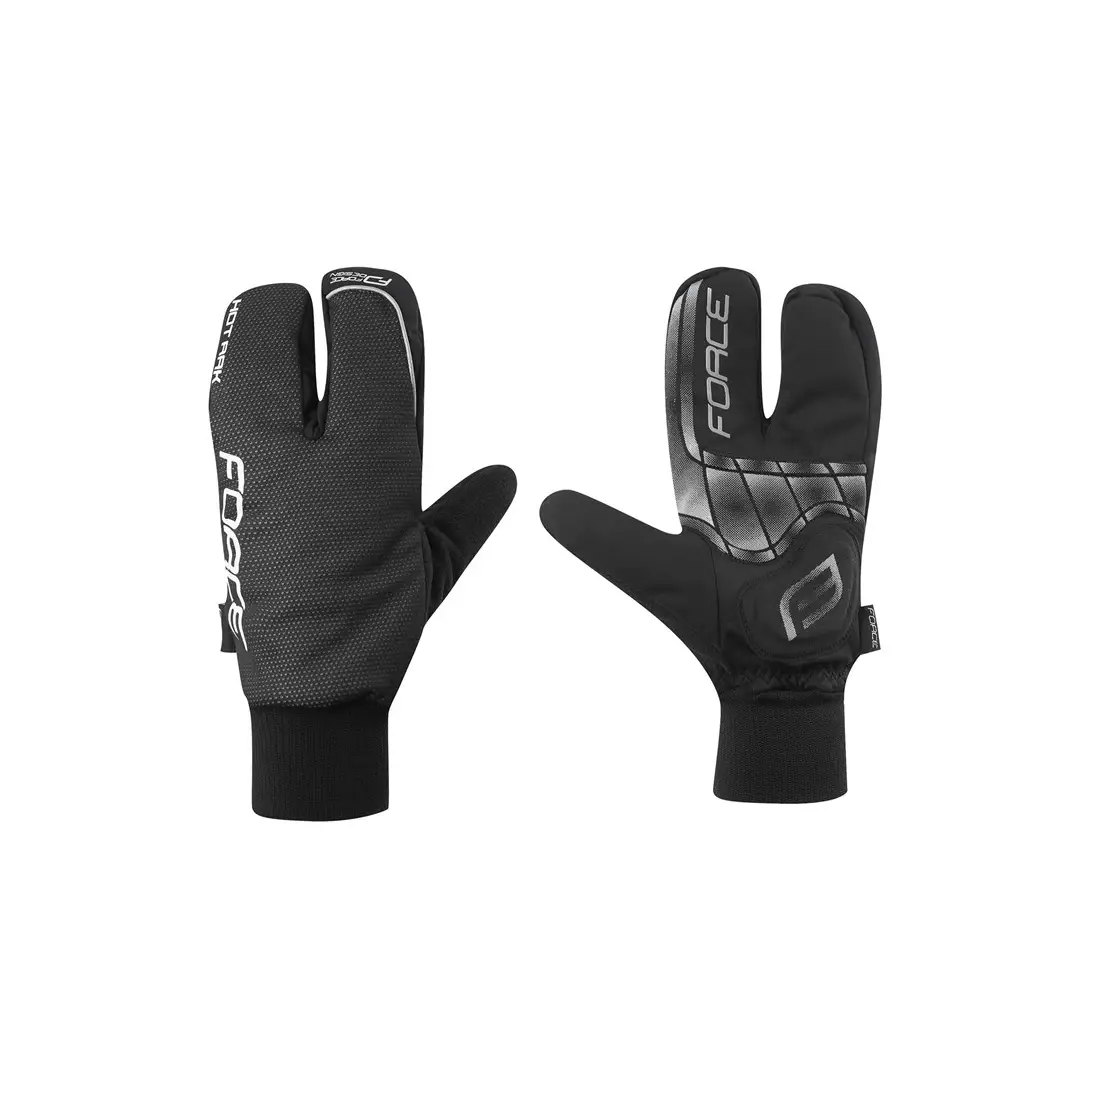 FORCE 90422 HOT RAK 3 winter cycling gloves, black